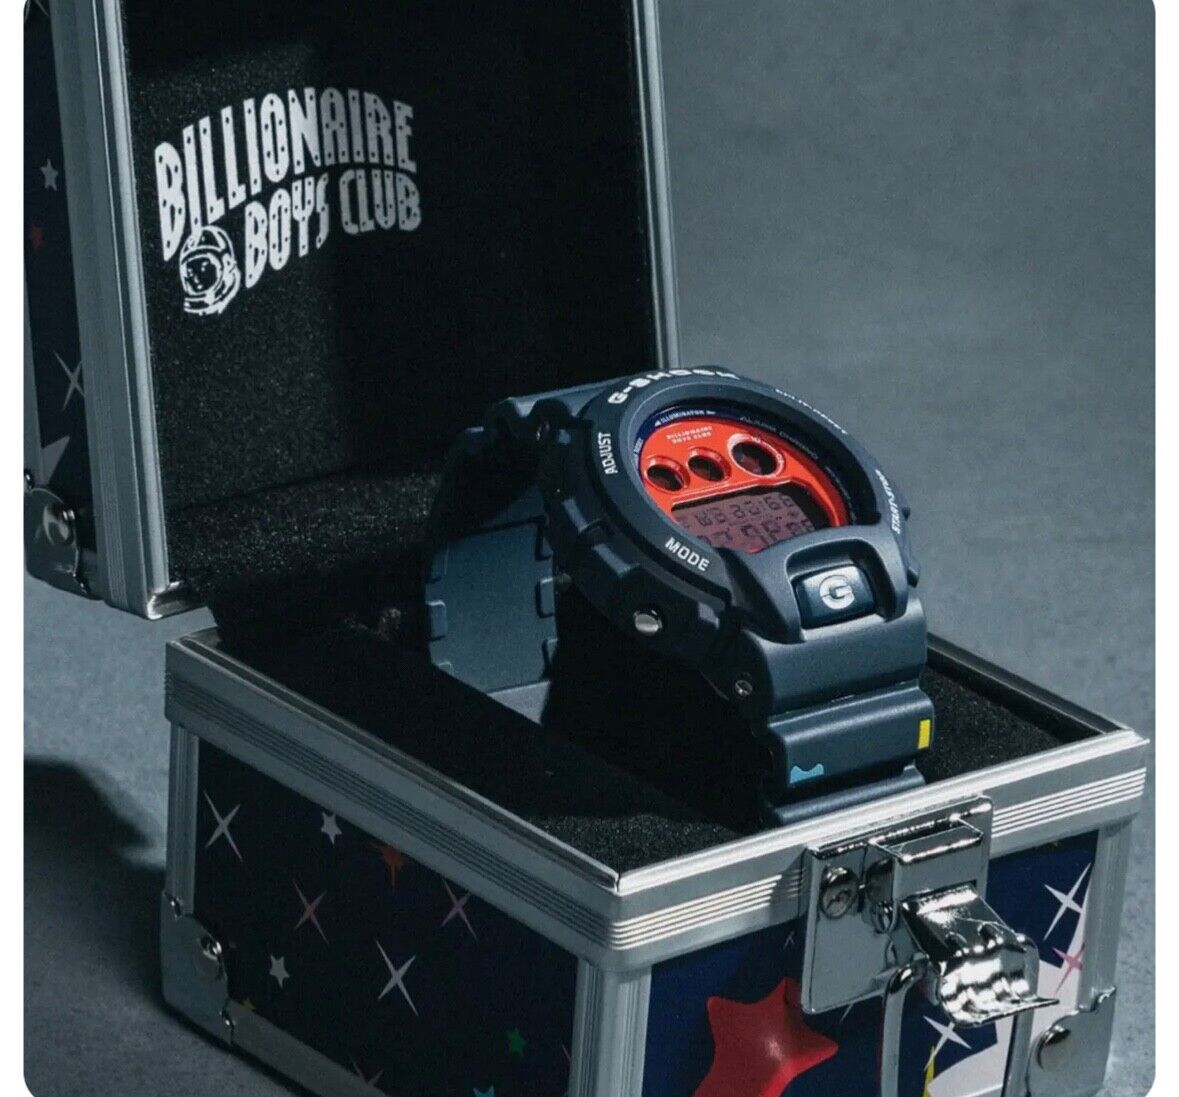 Casio G-Shock x Billionaire Boys Club STARFIELD DW-6900BBC22-2 Limited Edition